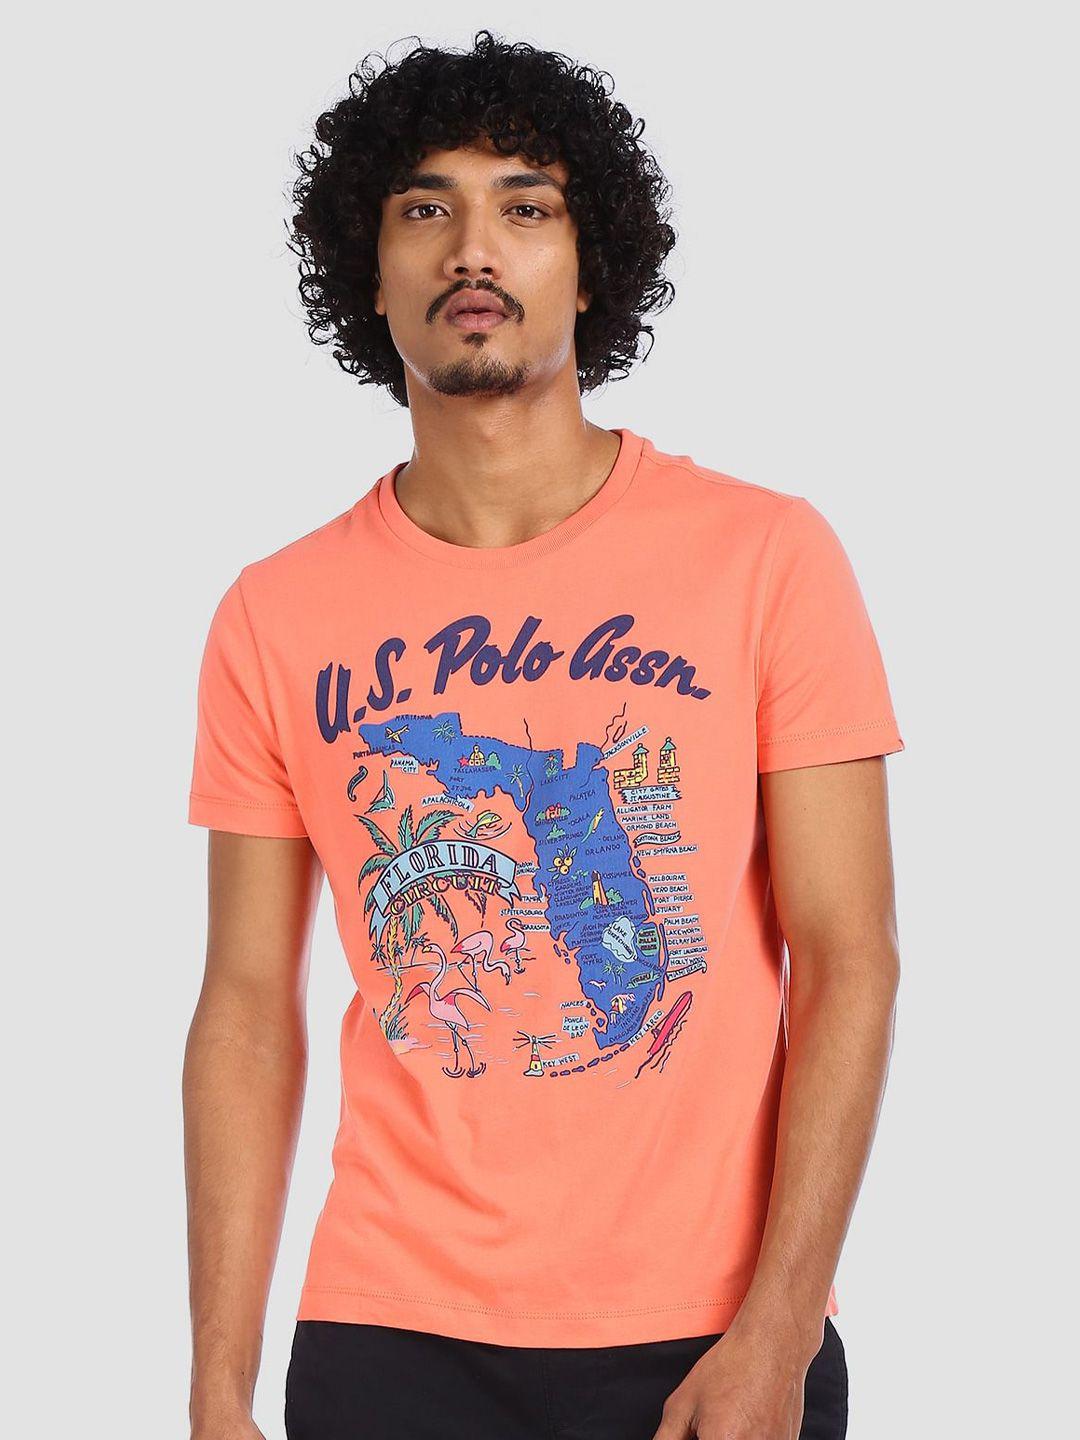 u.s.-polo-assn.-denim-co.-men-coral-pink-printed-slim-fit-round-neck-pure-cotton-t-shirt